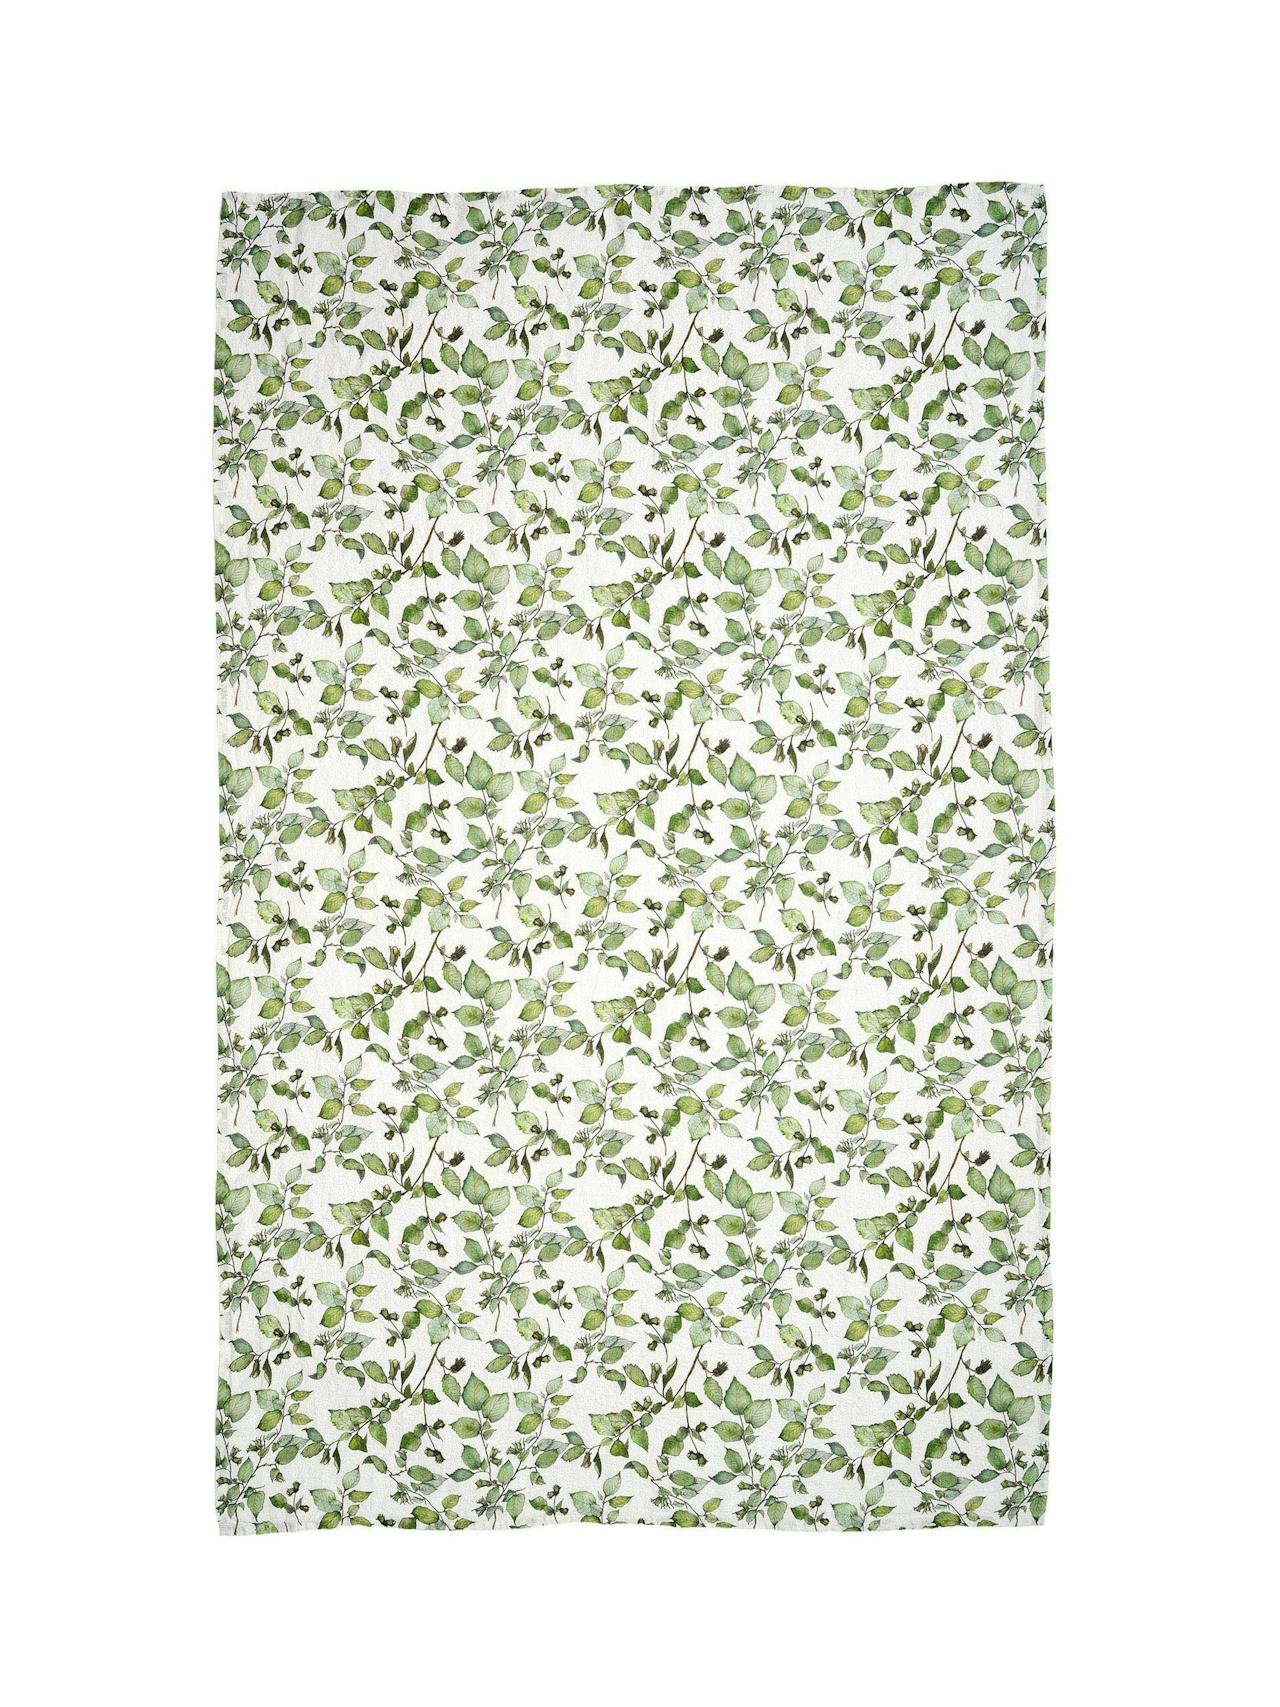 Oak Leaf Linen Table Cloth